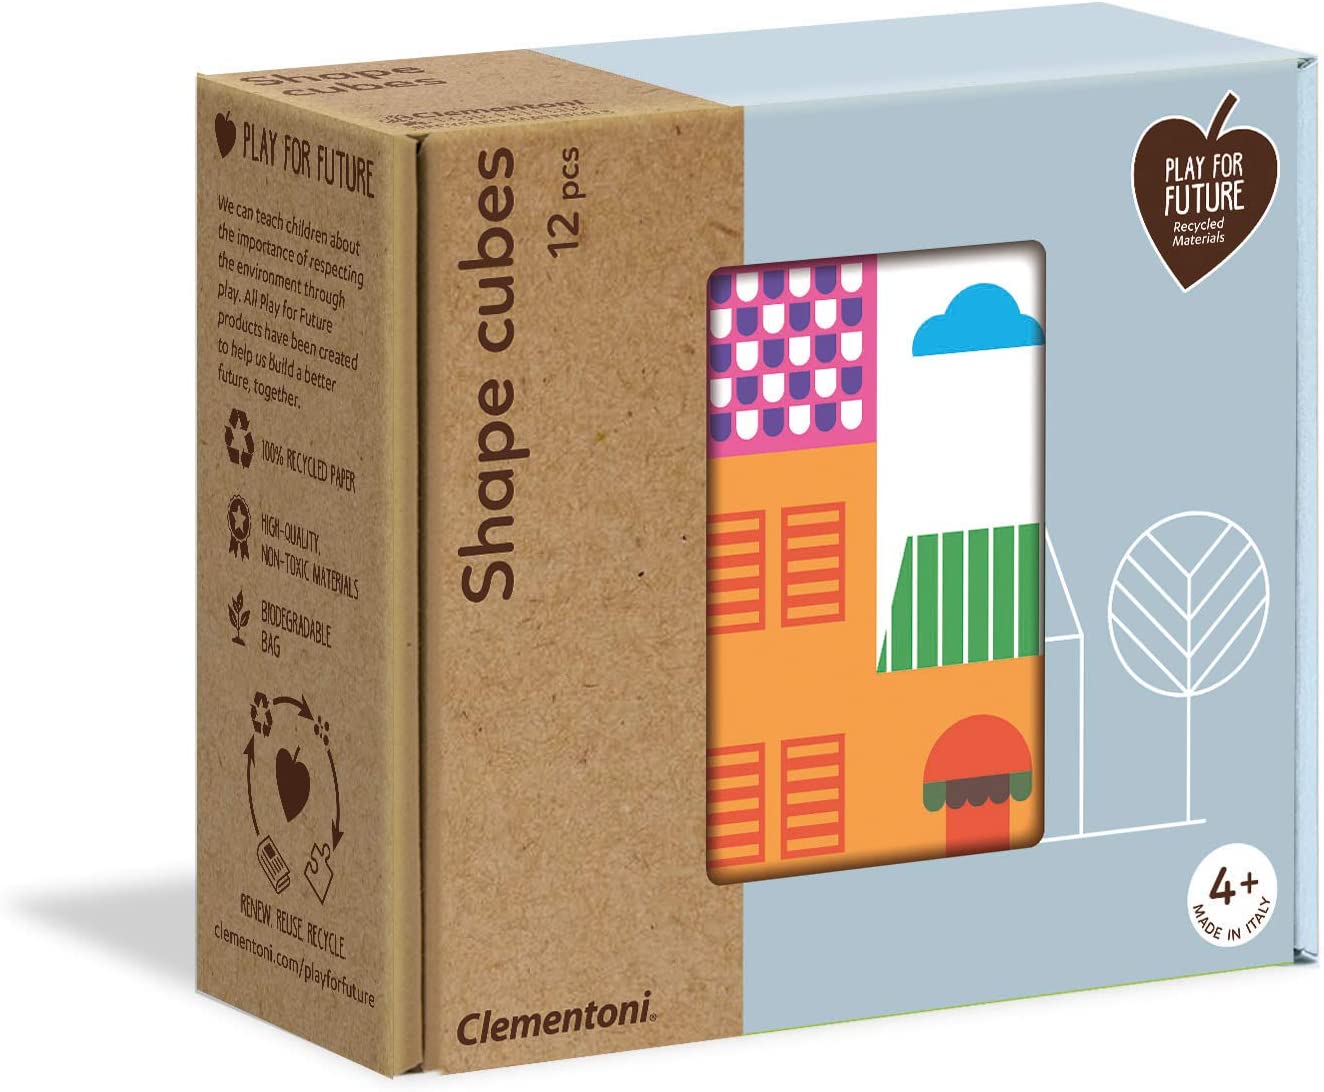 Clementoni - 16227 Shapes Cubes Case and House for Children, Multi-Colour, 16227